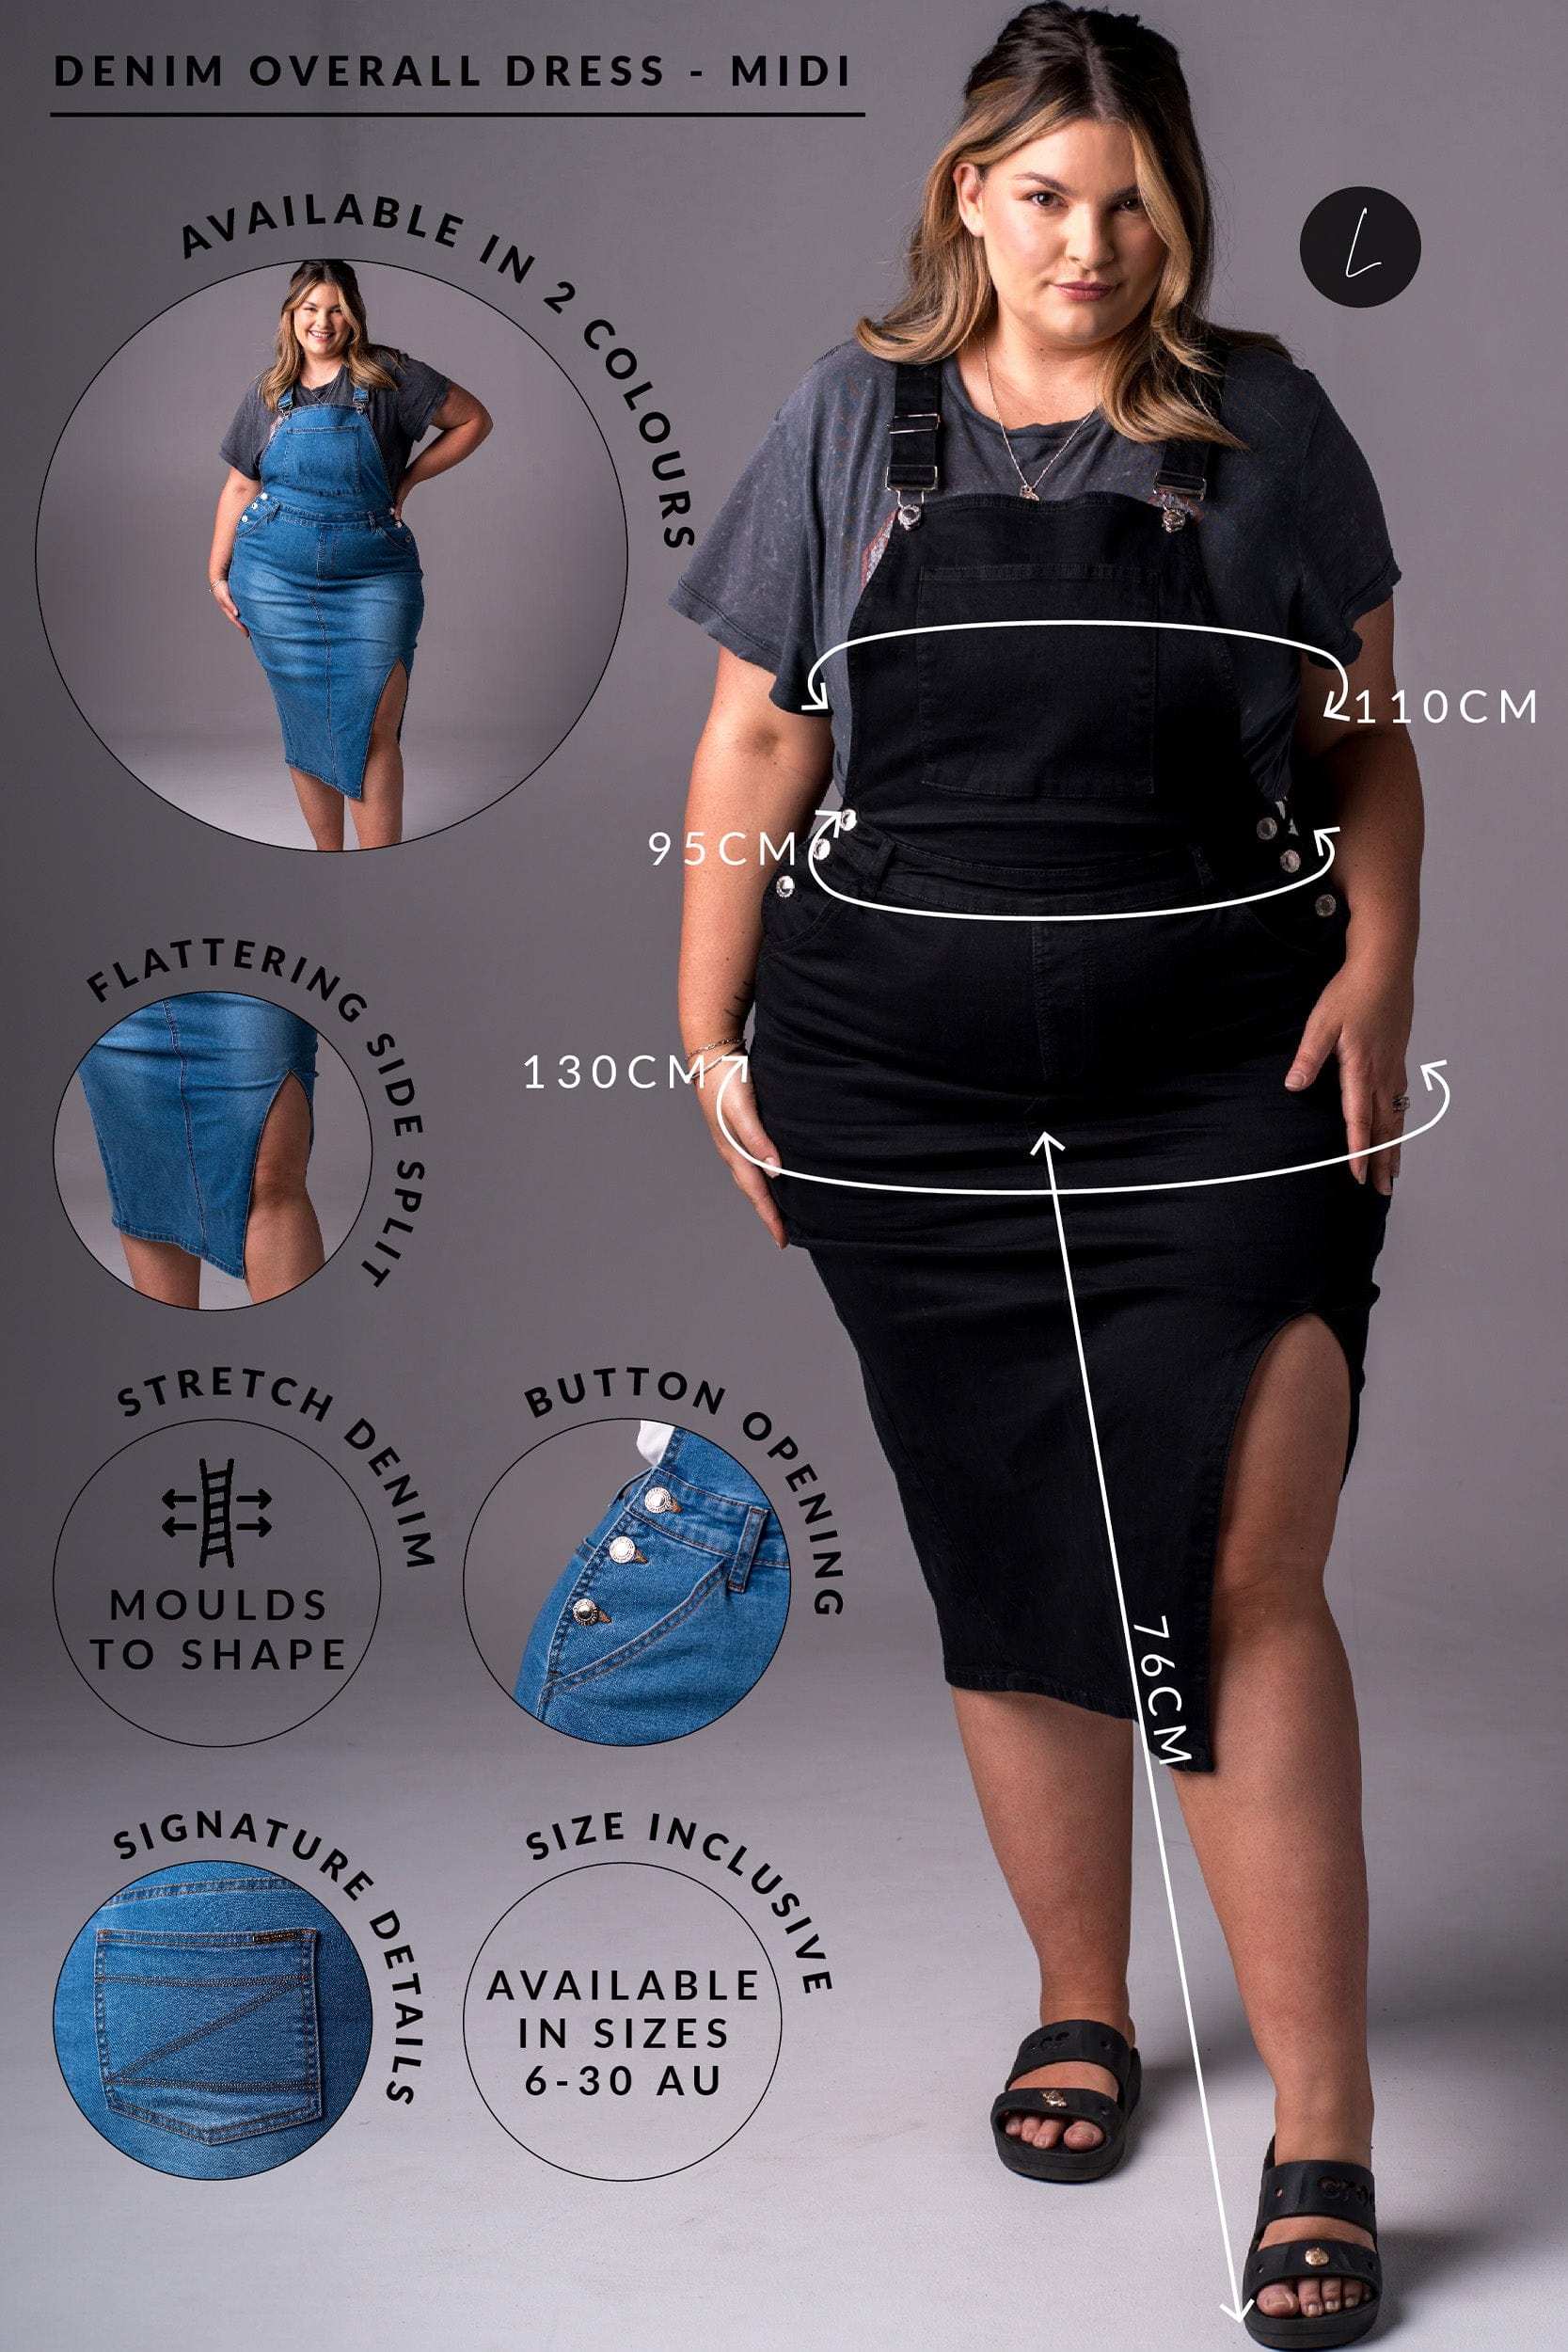 Black Denim Overall Dress - Midi OVERALL